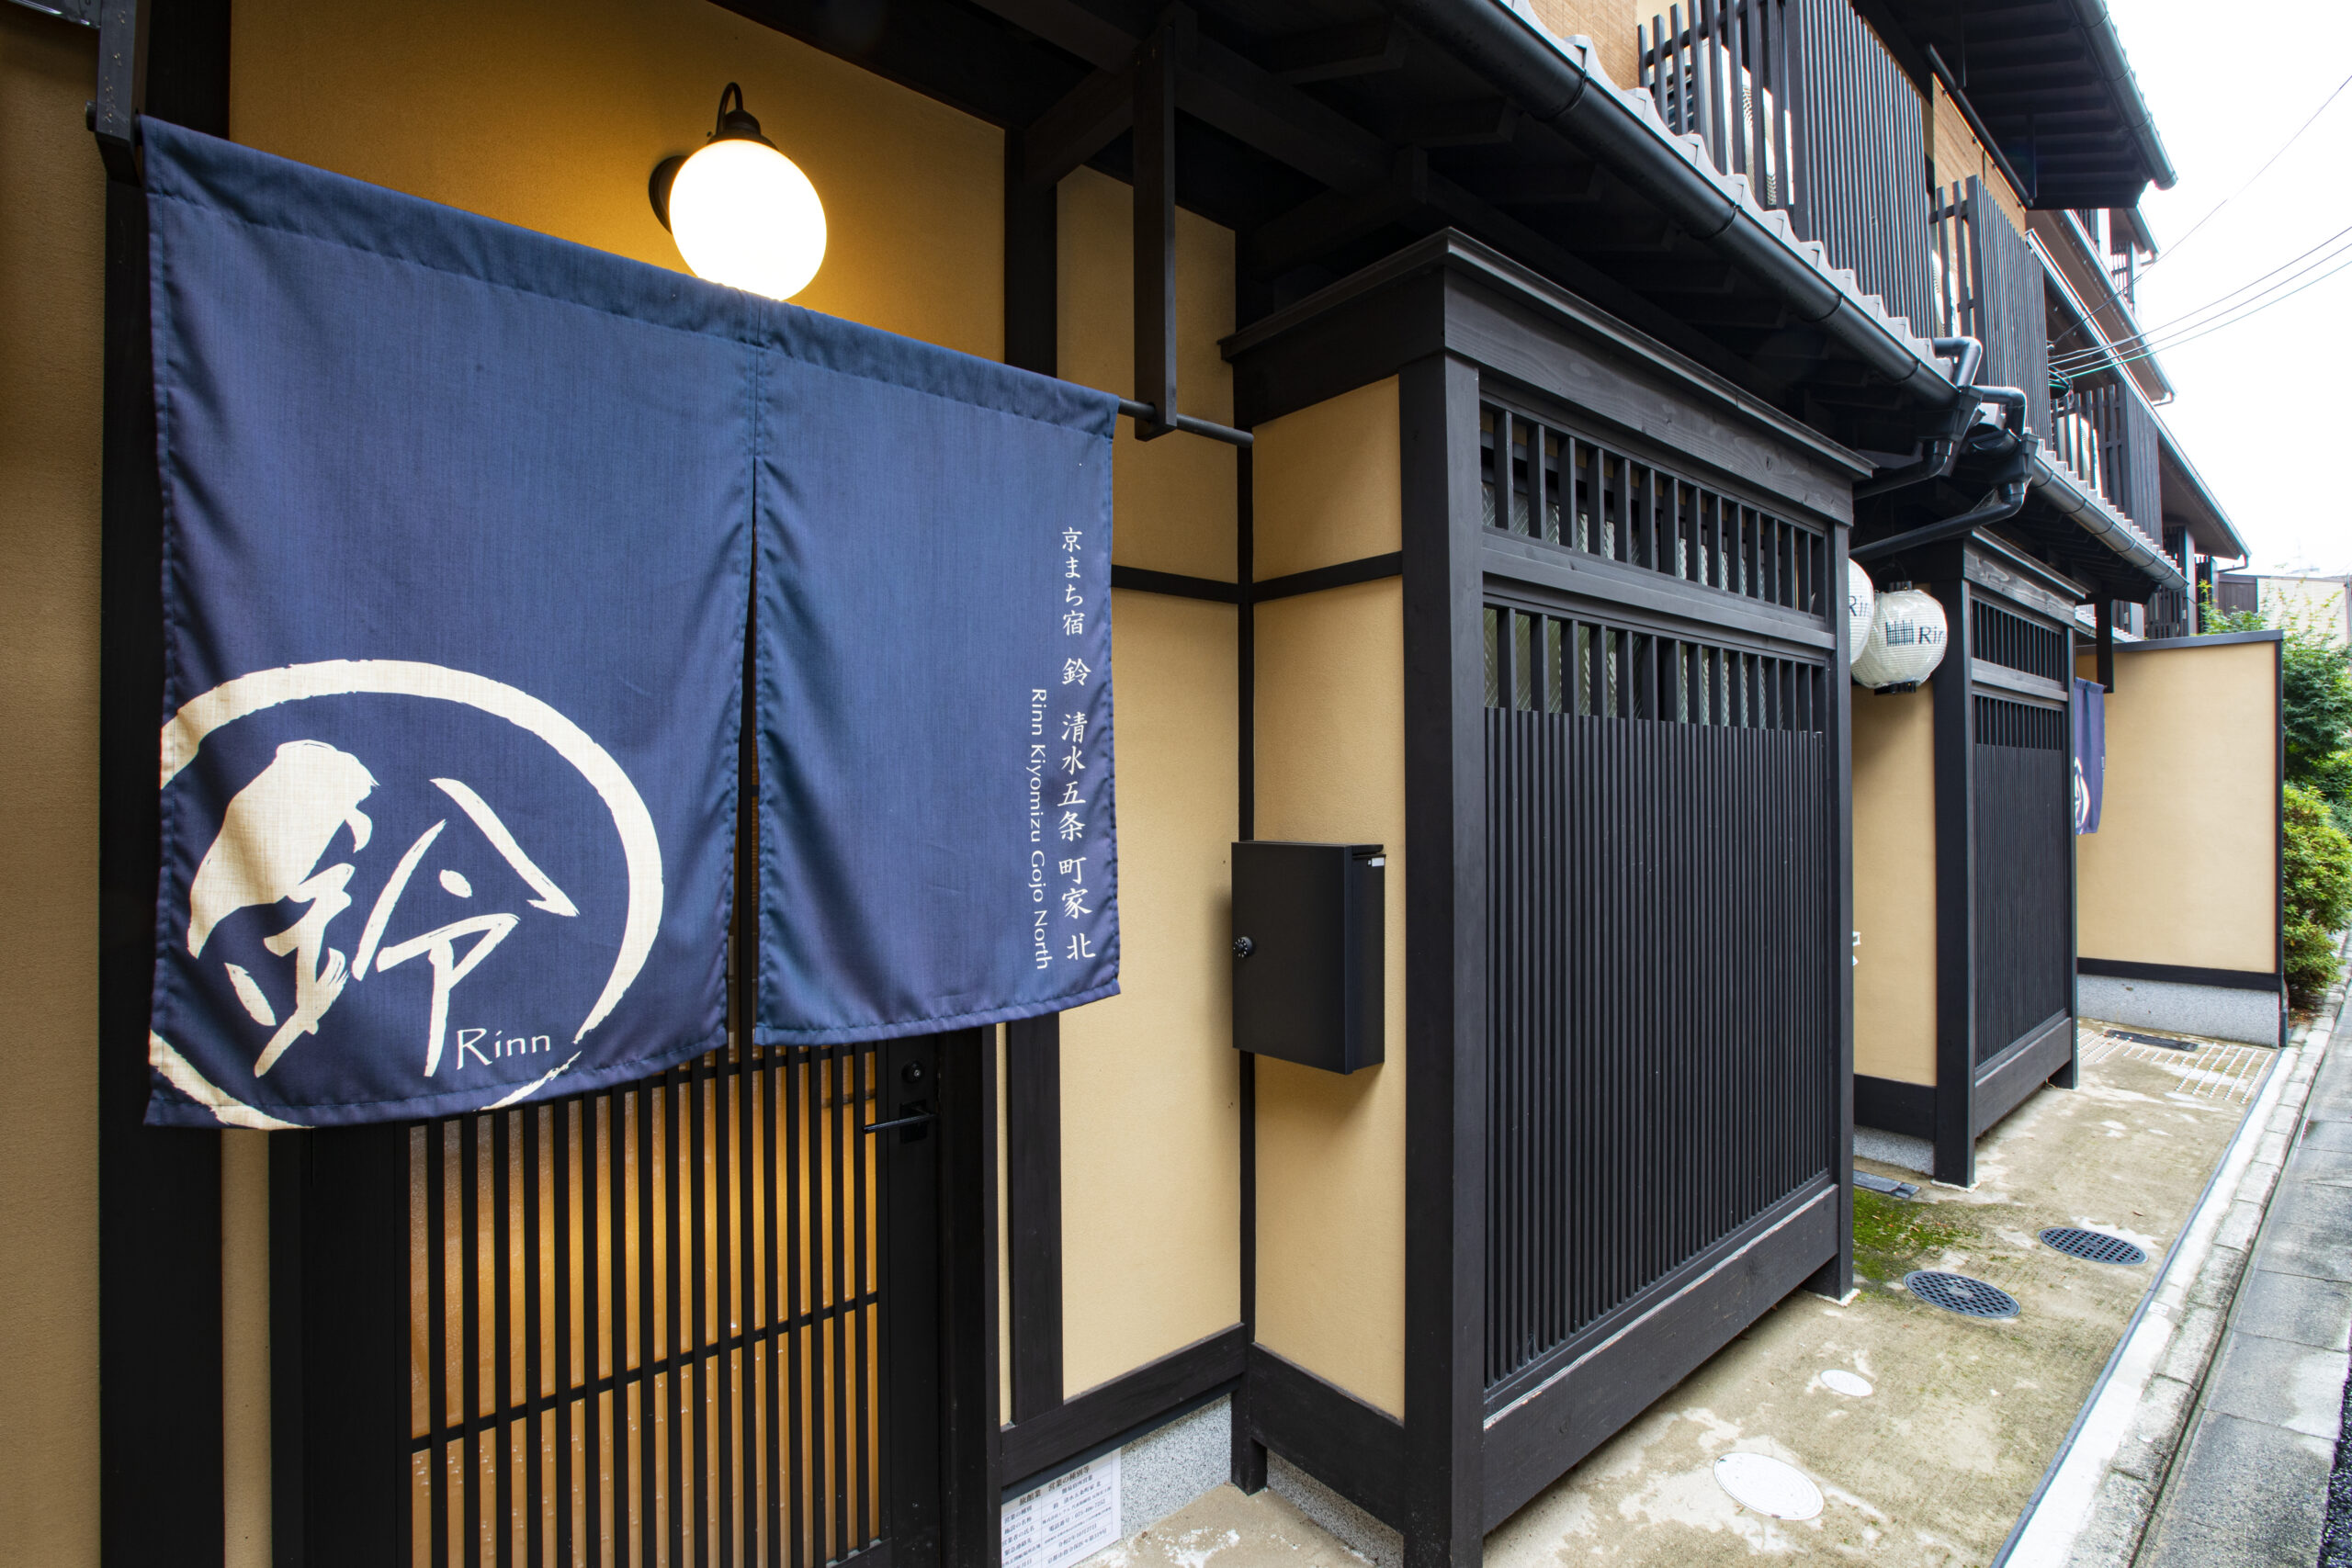 「Rinn Kiyomizu Gojo Machiya North」のサムネイル画像